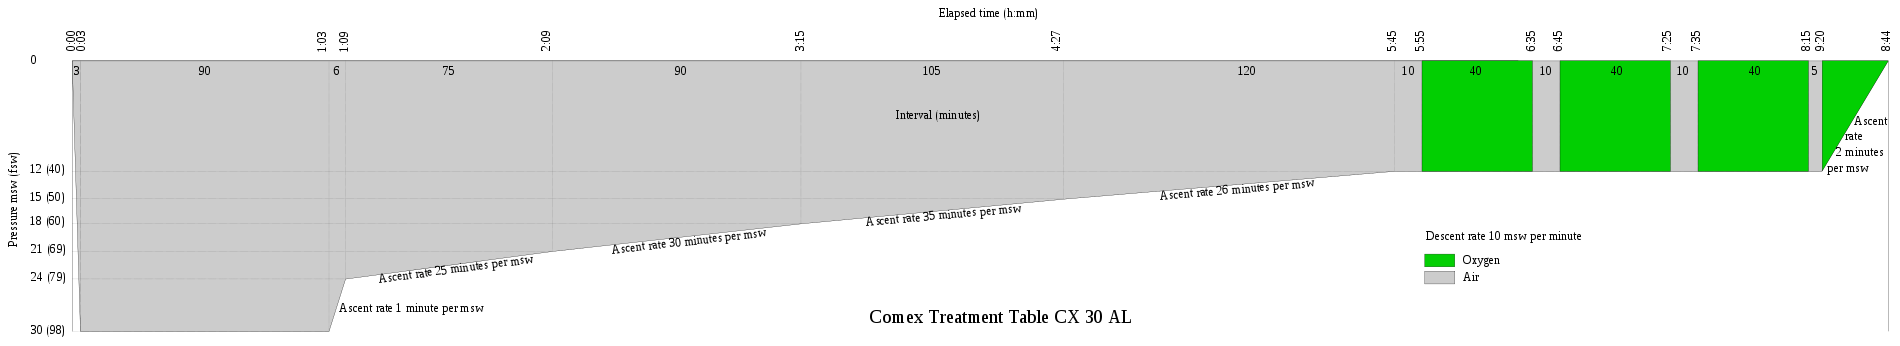 Comex CX 30 AL Recompression treatment table